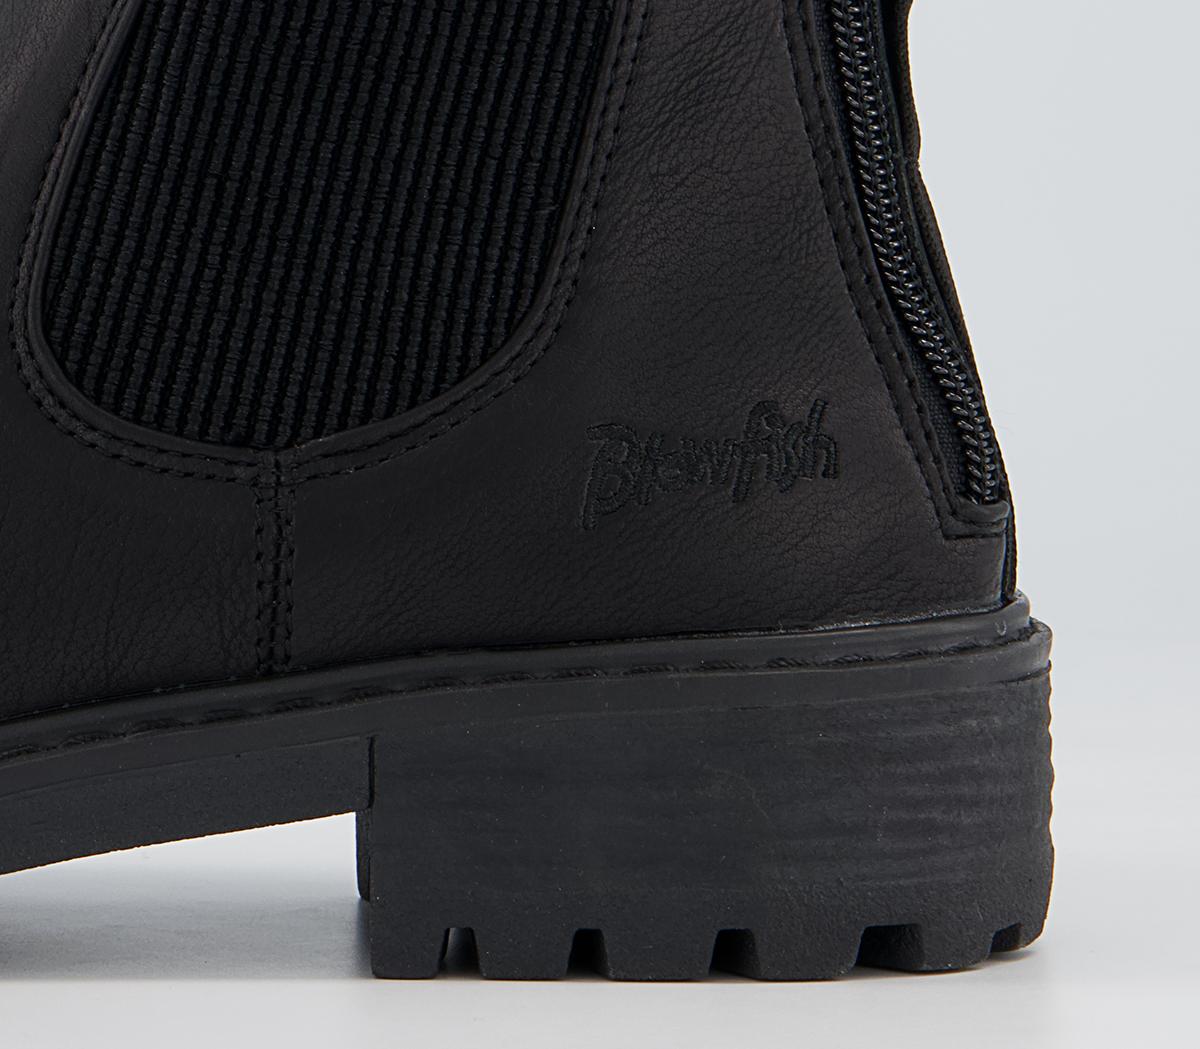 Blowfish Malibu Raffal Chelsea Boots Black - Women's Ankle Boots